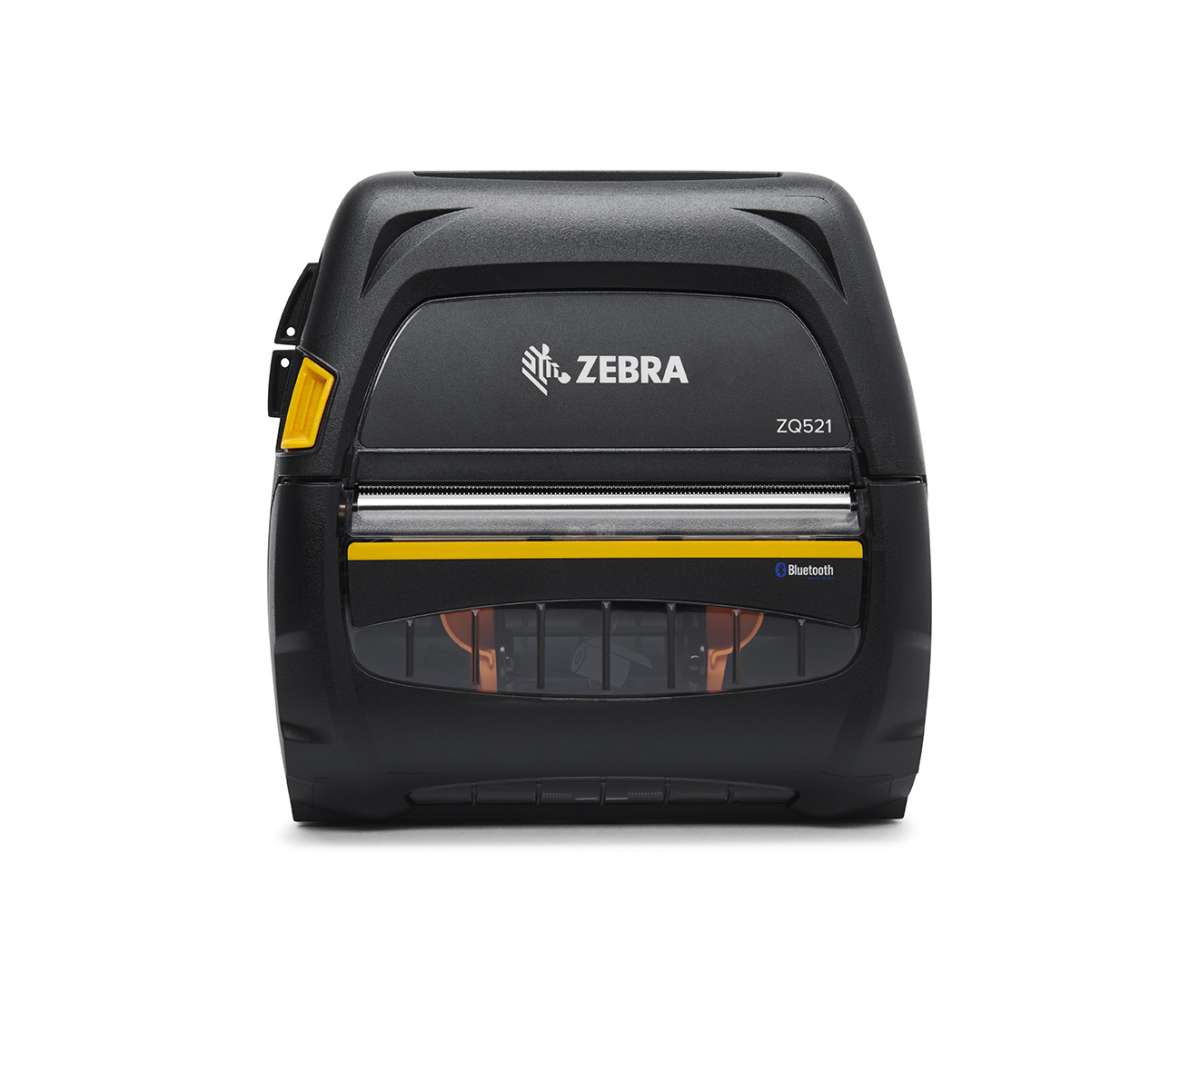 Zebra Zq521 Mobile Drucker Drucker 4logistic 0673